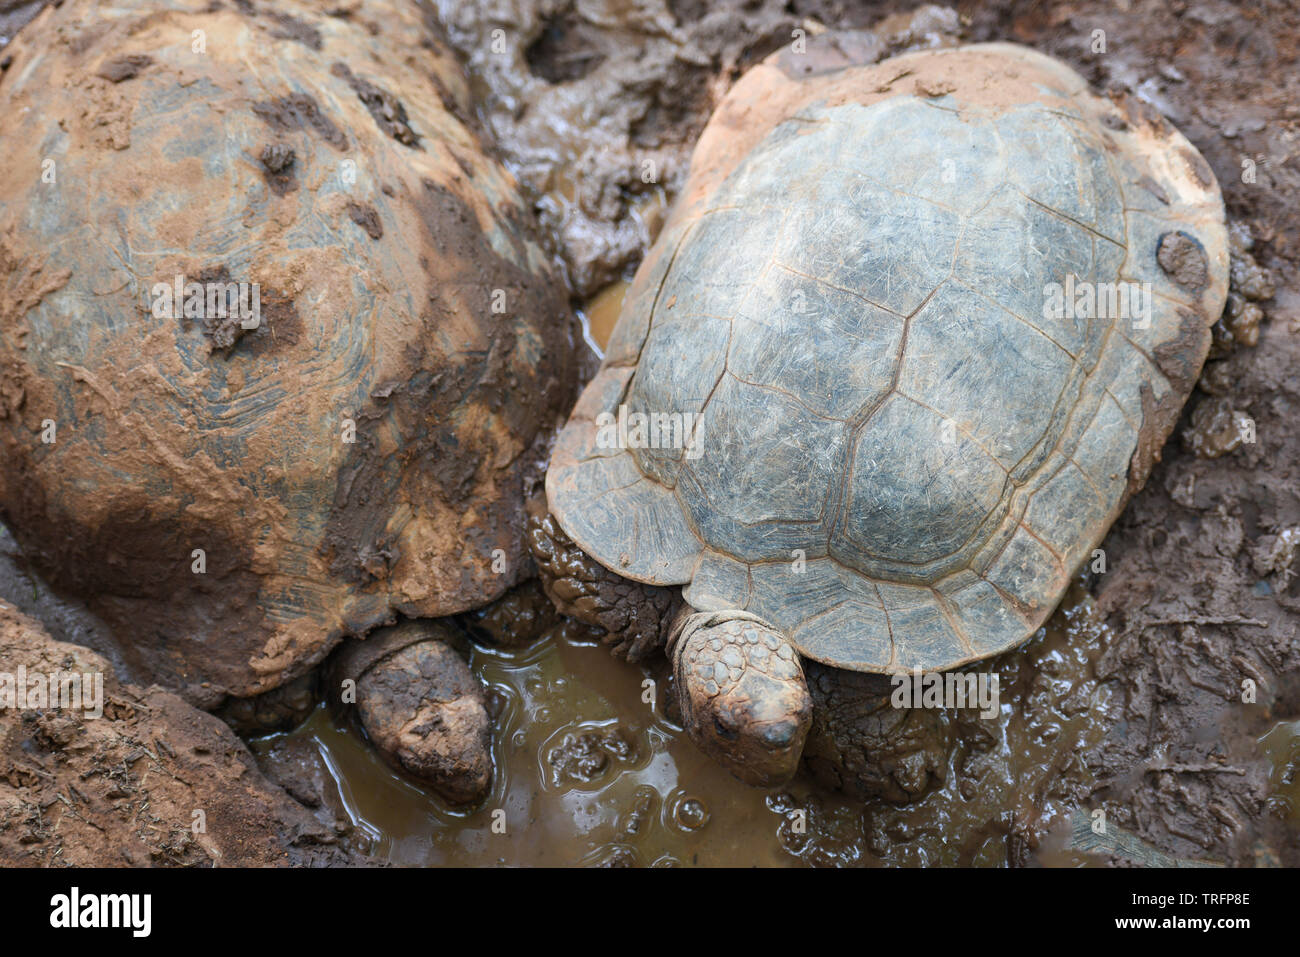 Asian Giant Tortoise / Big turtle on mud pond Stock Photo